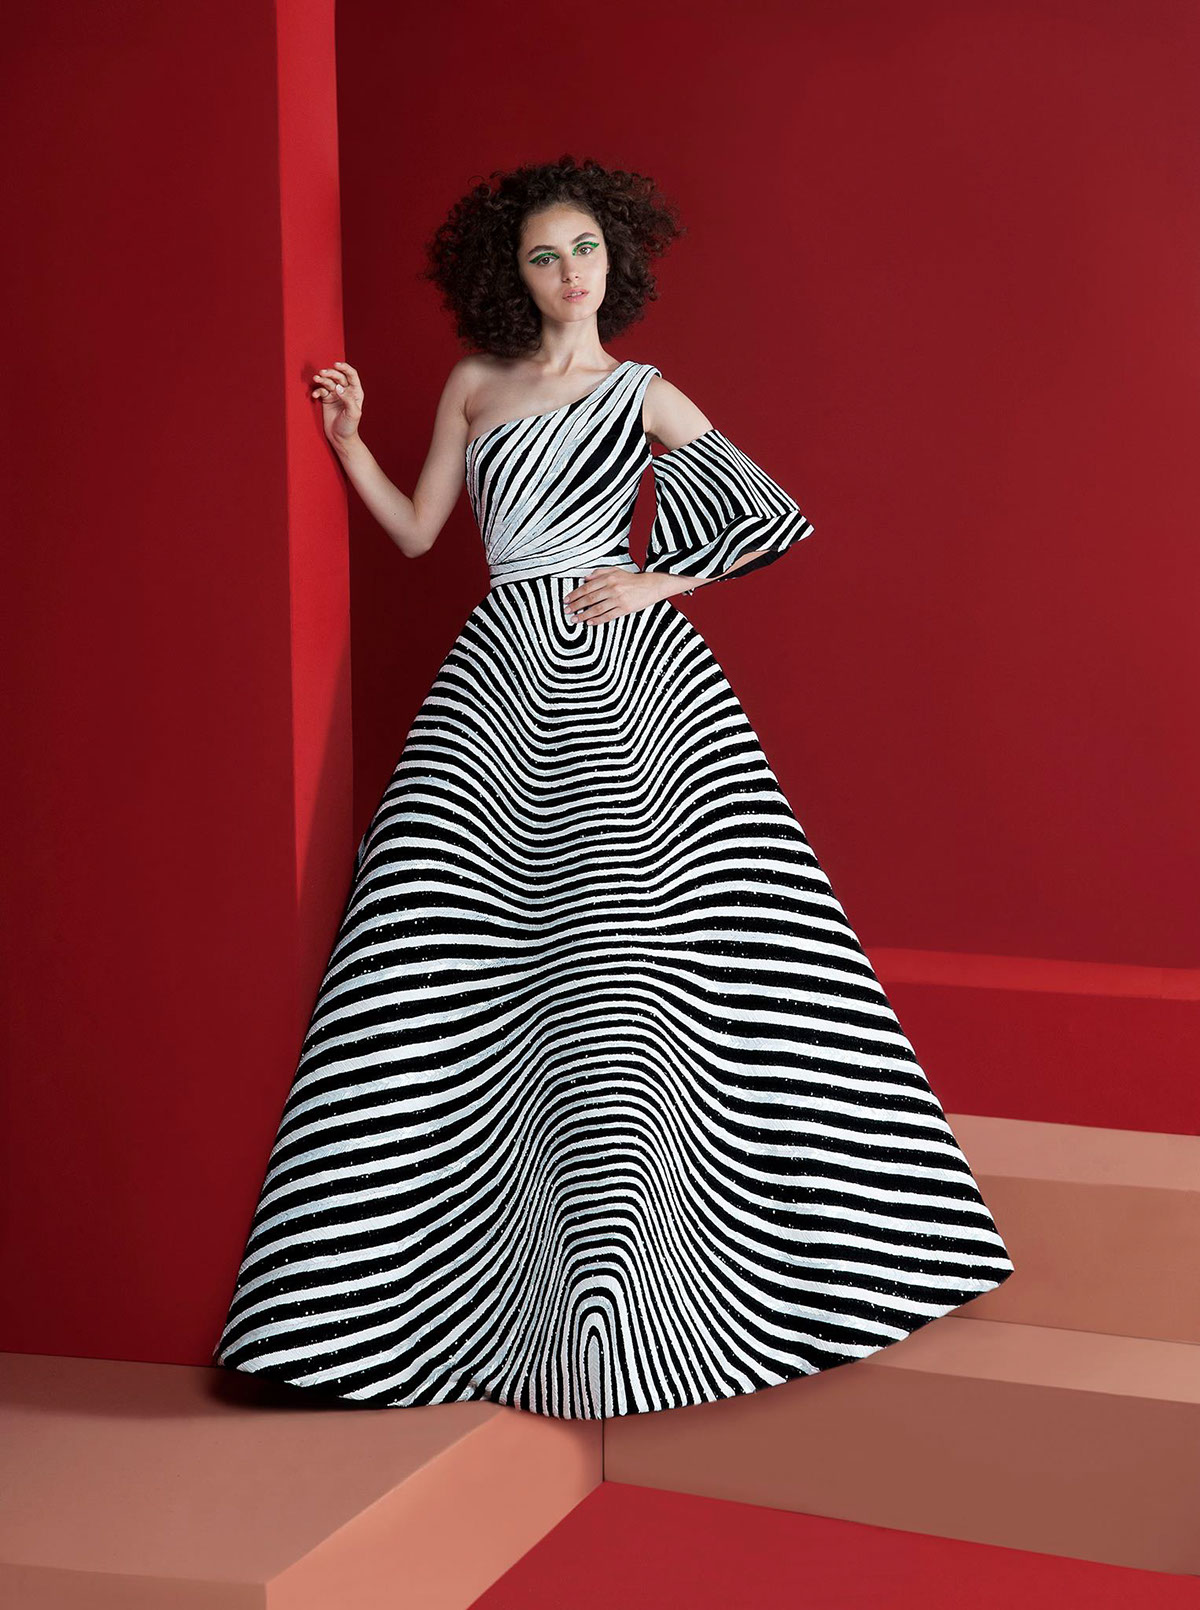 Paris haute couture dress fabric illusion pattern model stripes Fun